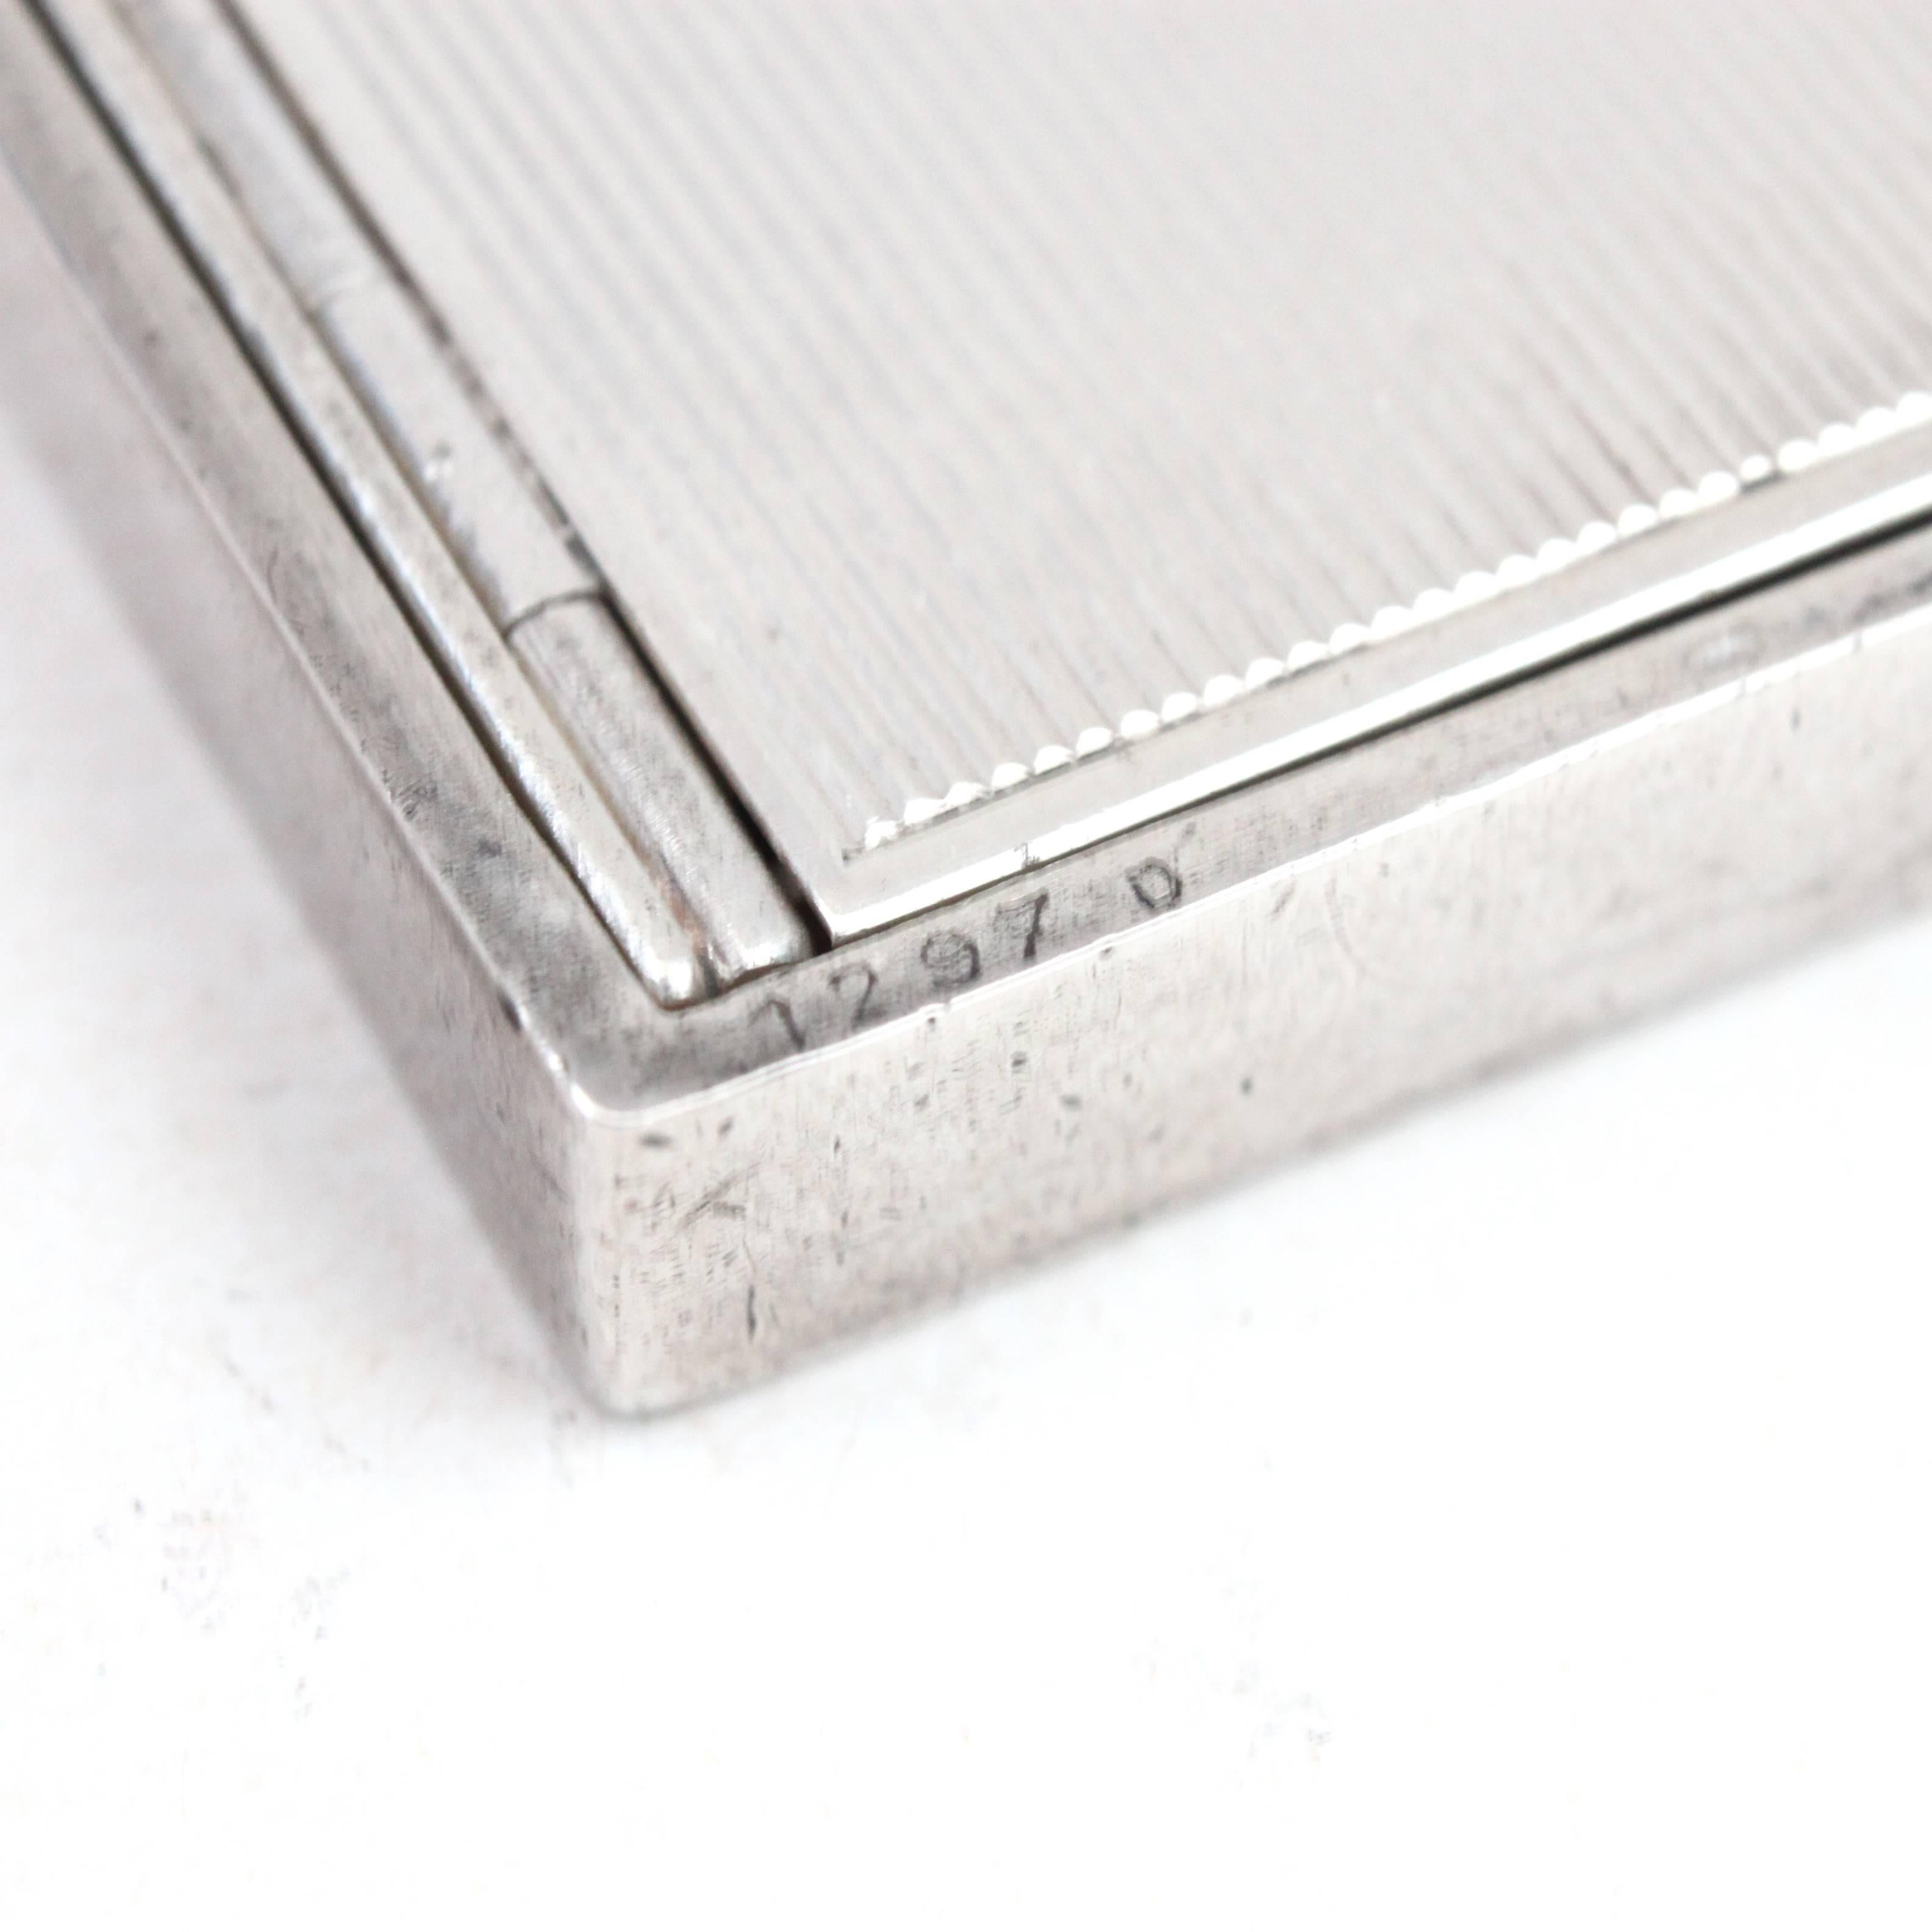 Mellerio Dits Meller Sapphire Silver Vanity Compact Box 2